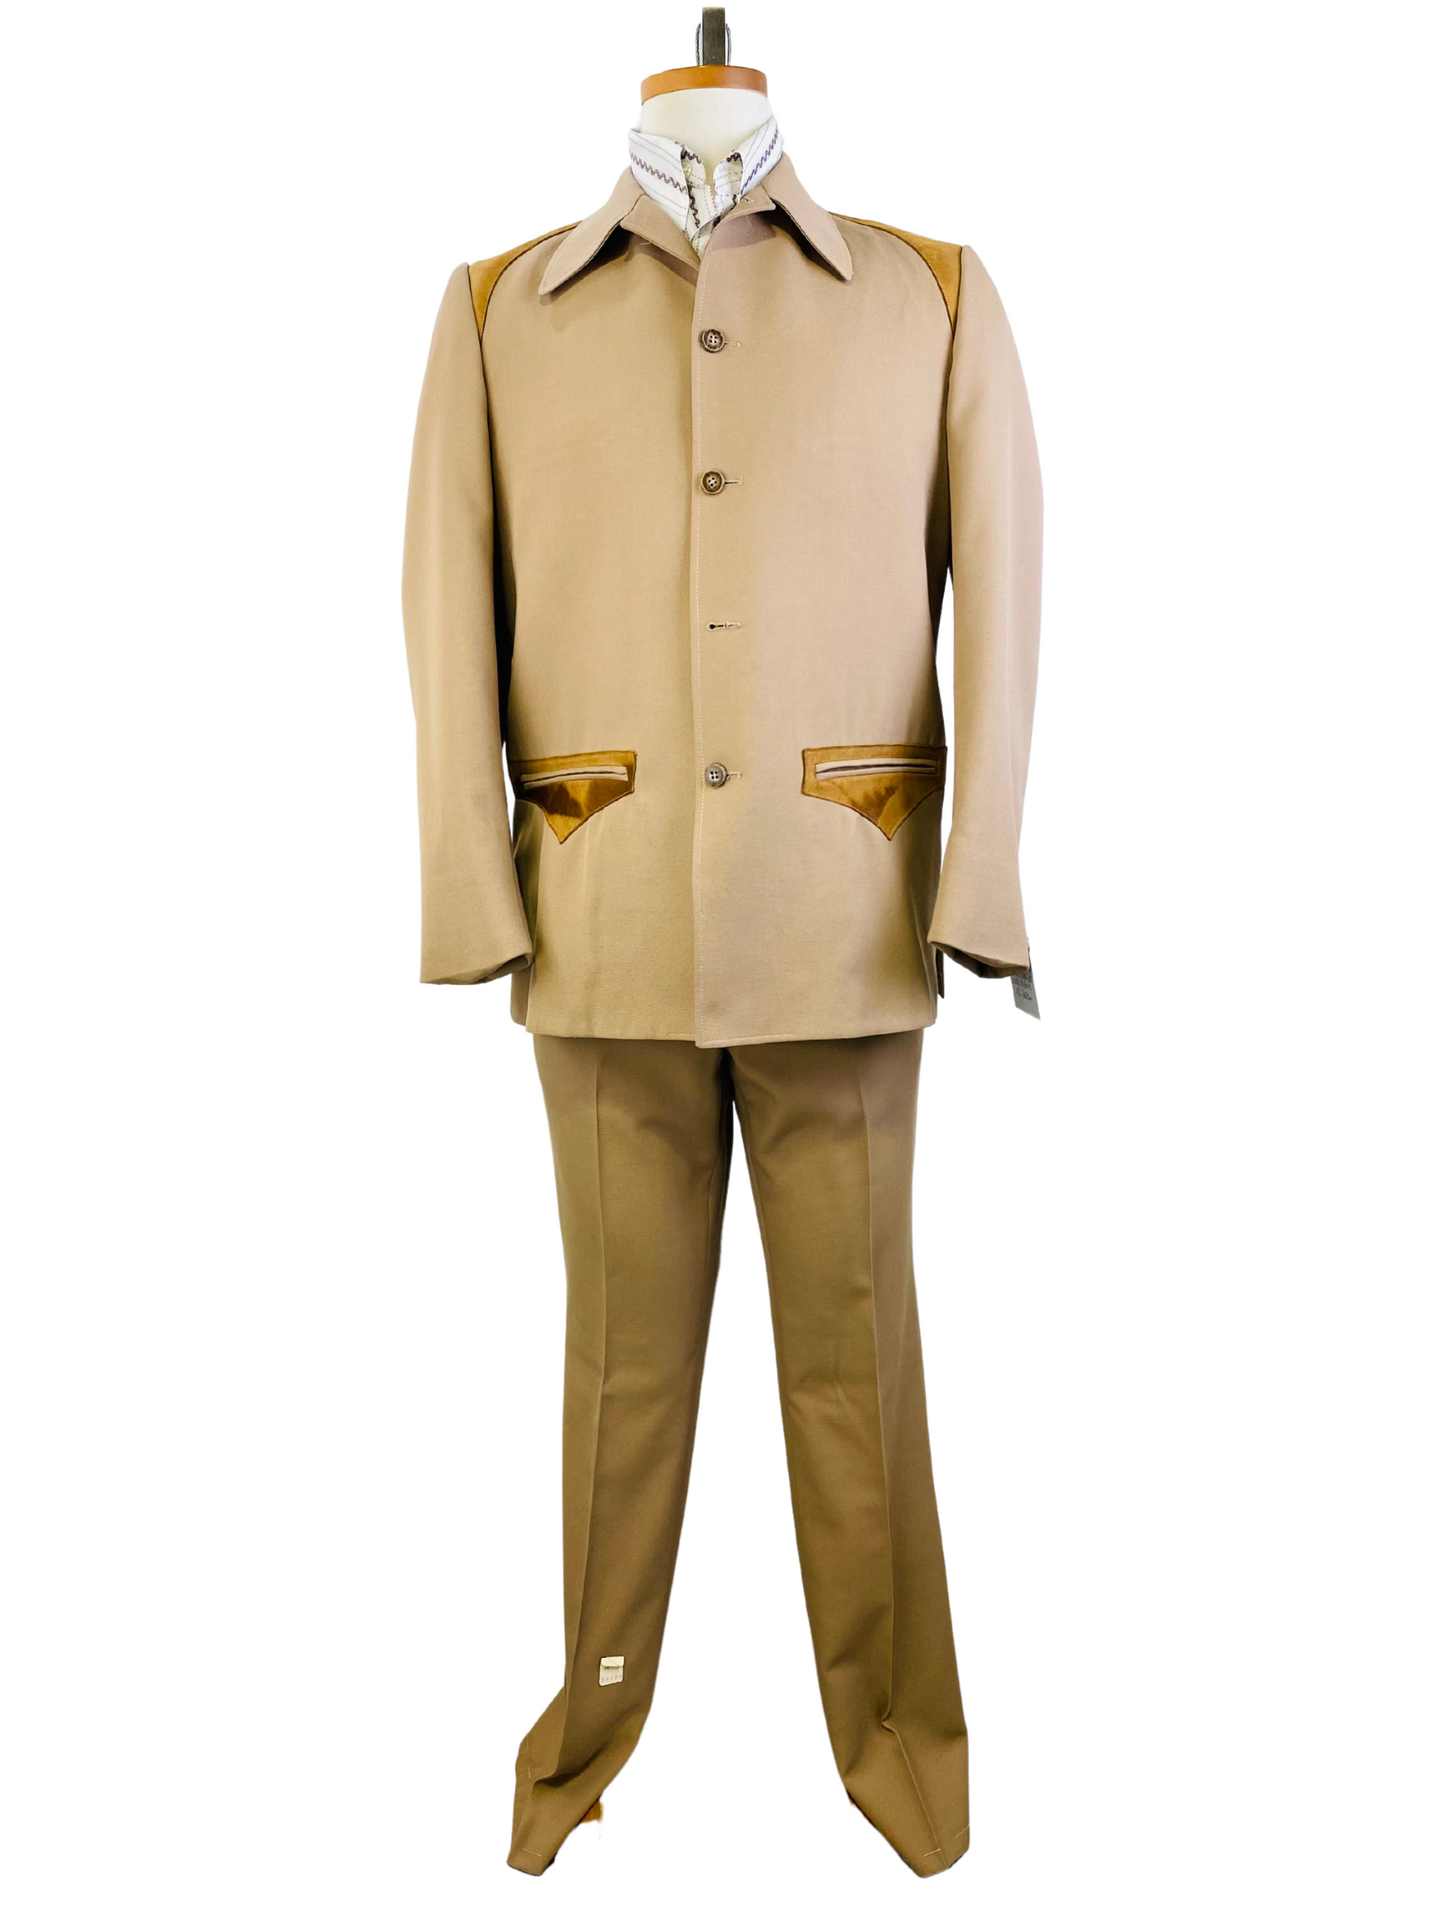 Early 1970s Vintage Deadstock Men's Suit, Brown Western Style 2-Piece Leisure Suit, Suede Trim, NOS, C42